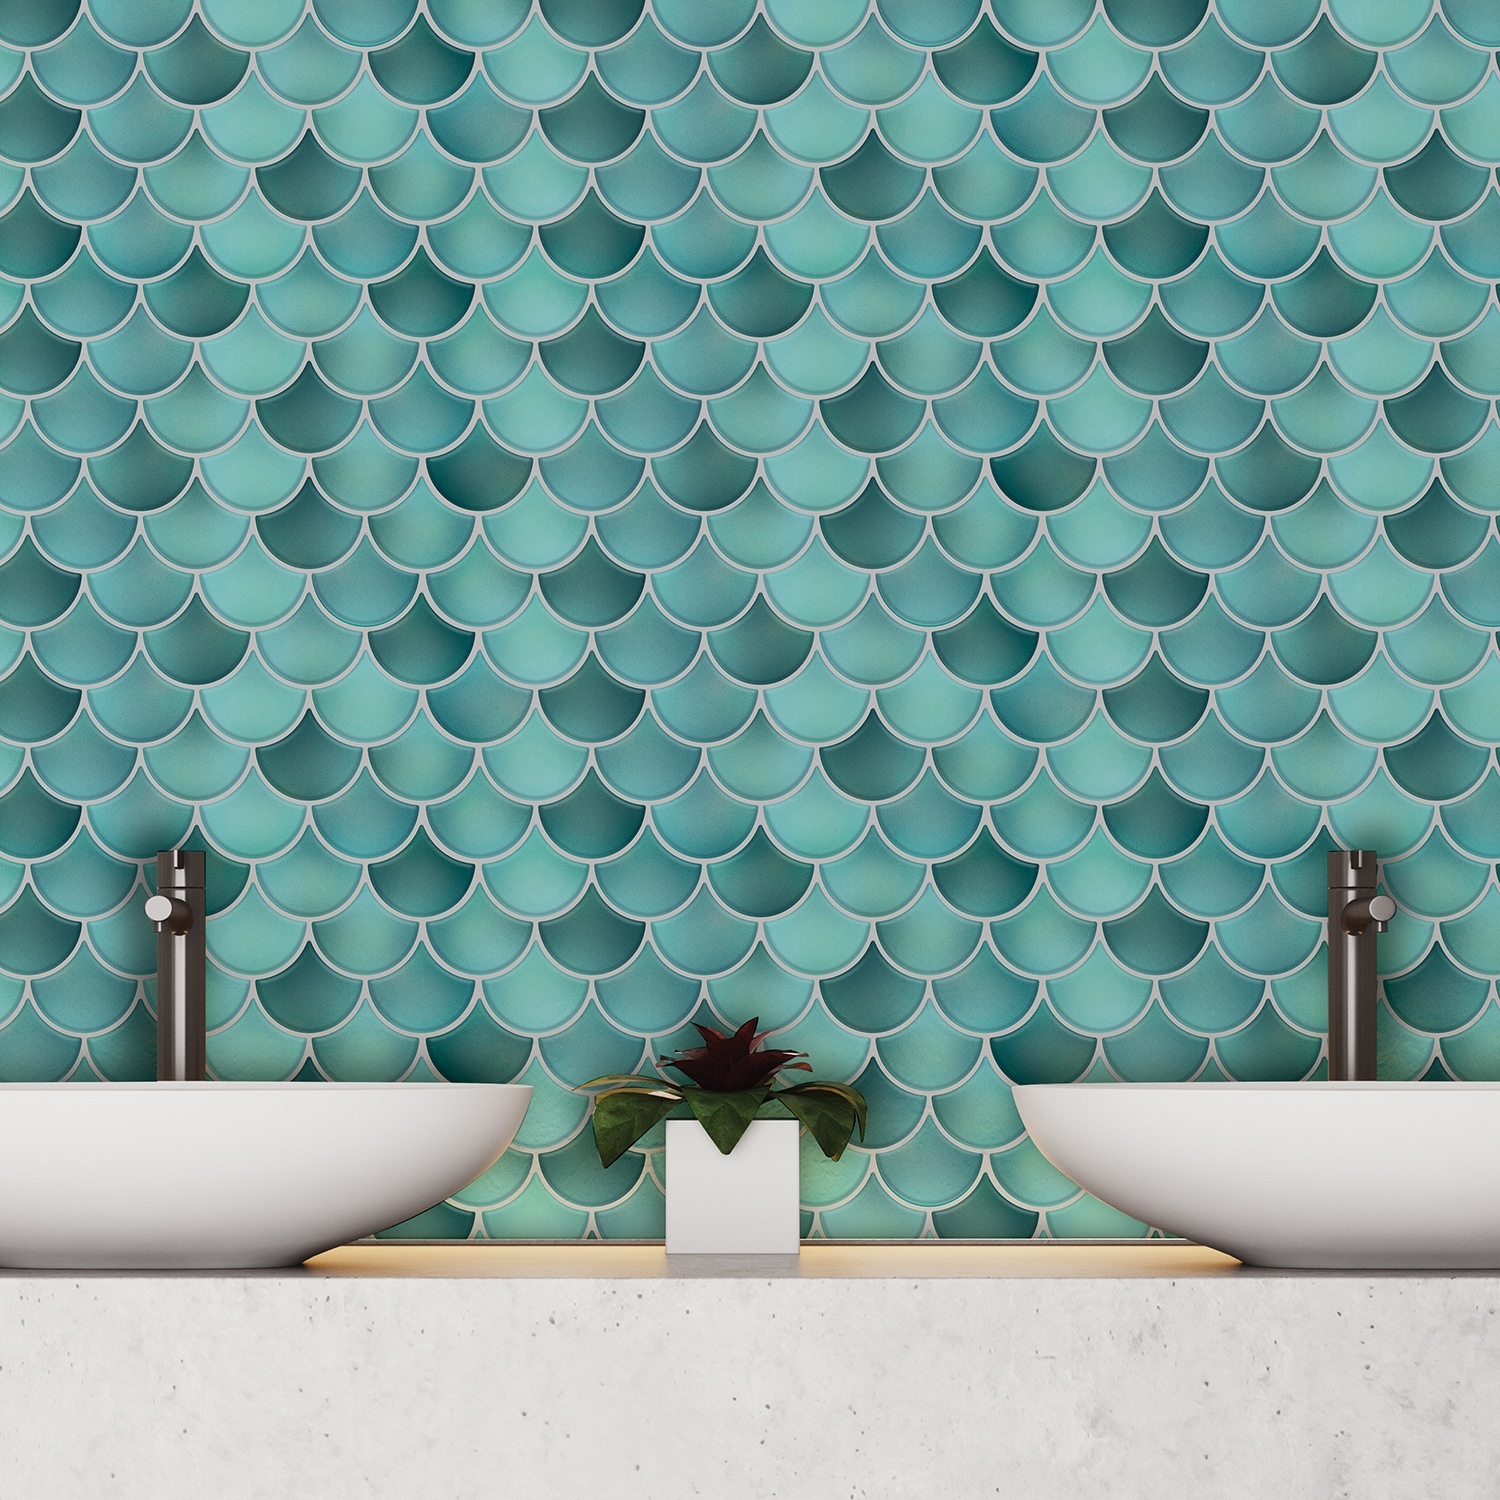 Green Backsplash Tiles - Bed Bath & Beyond